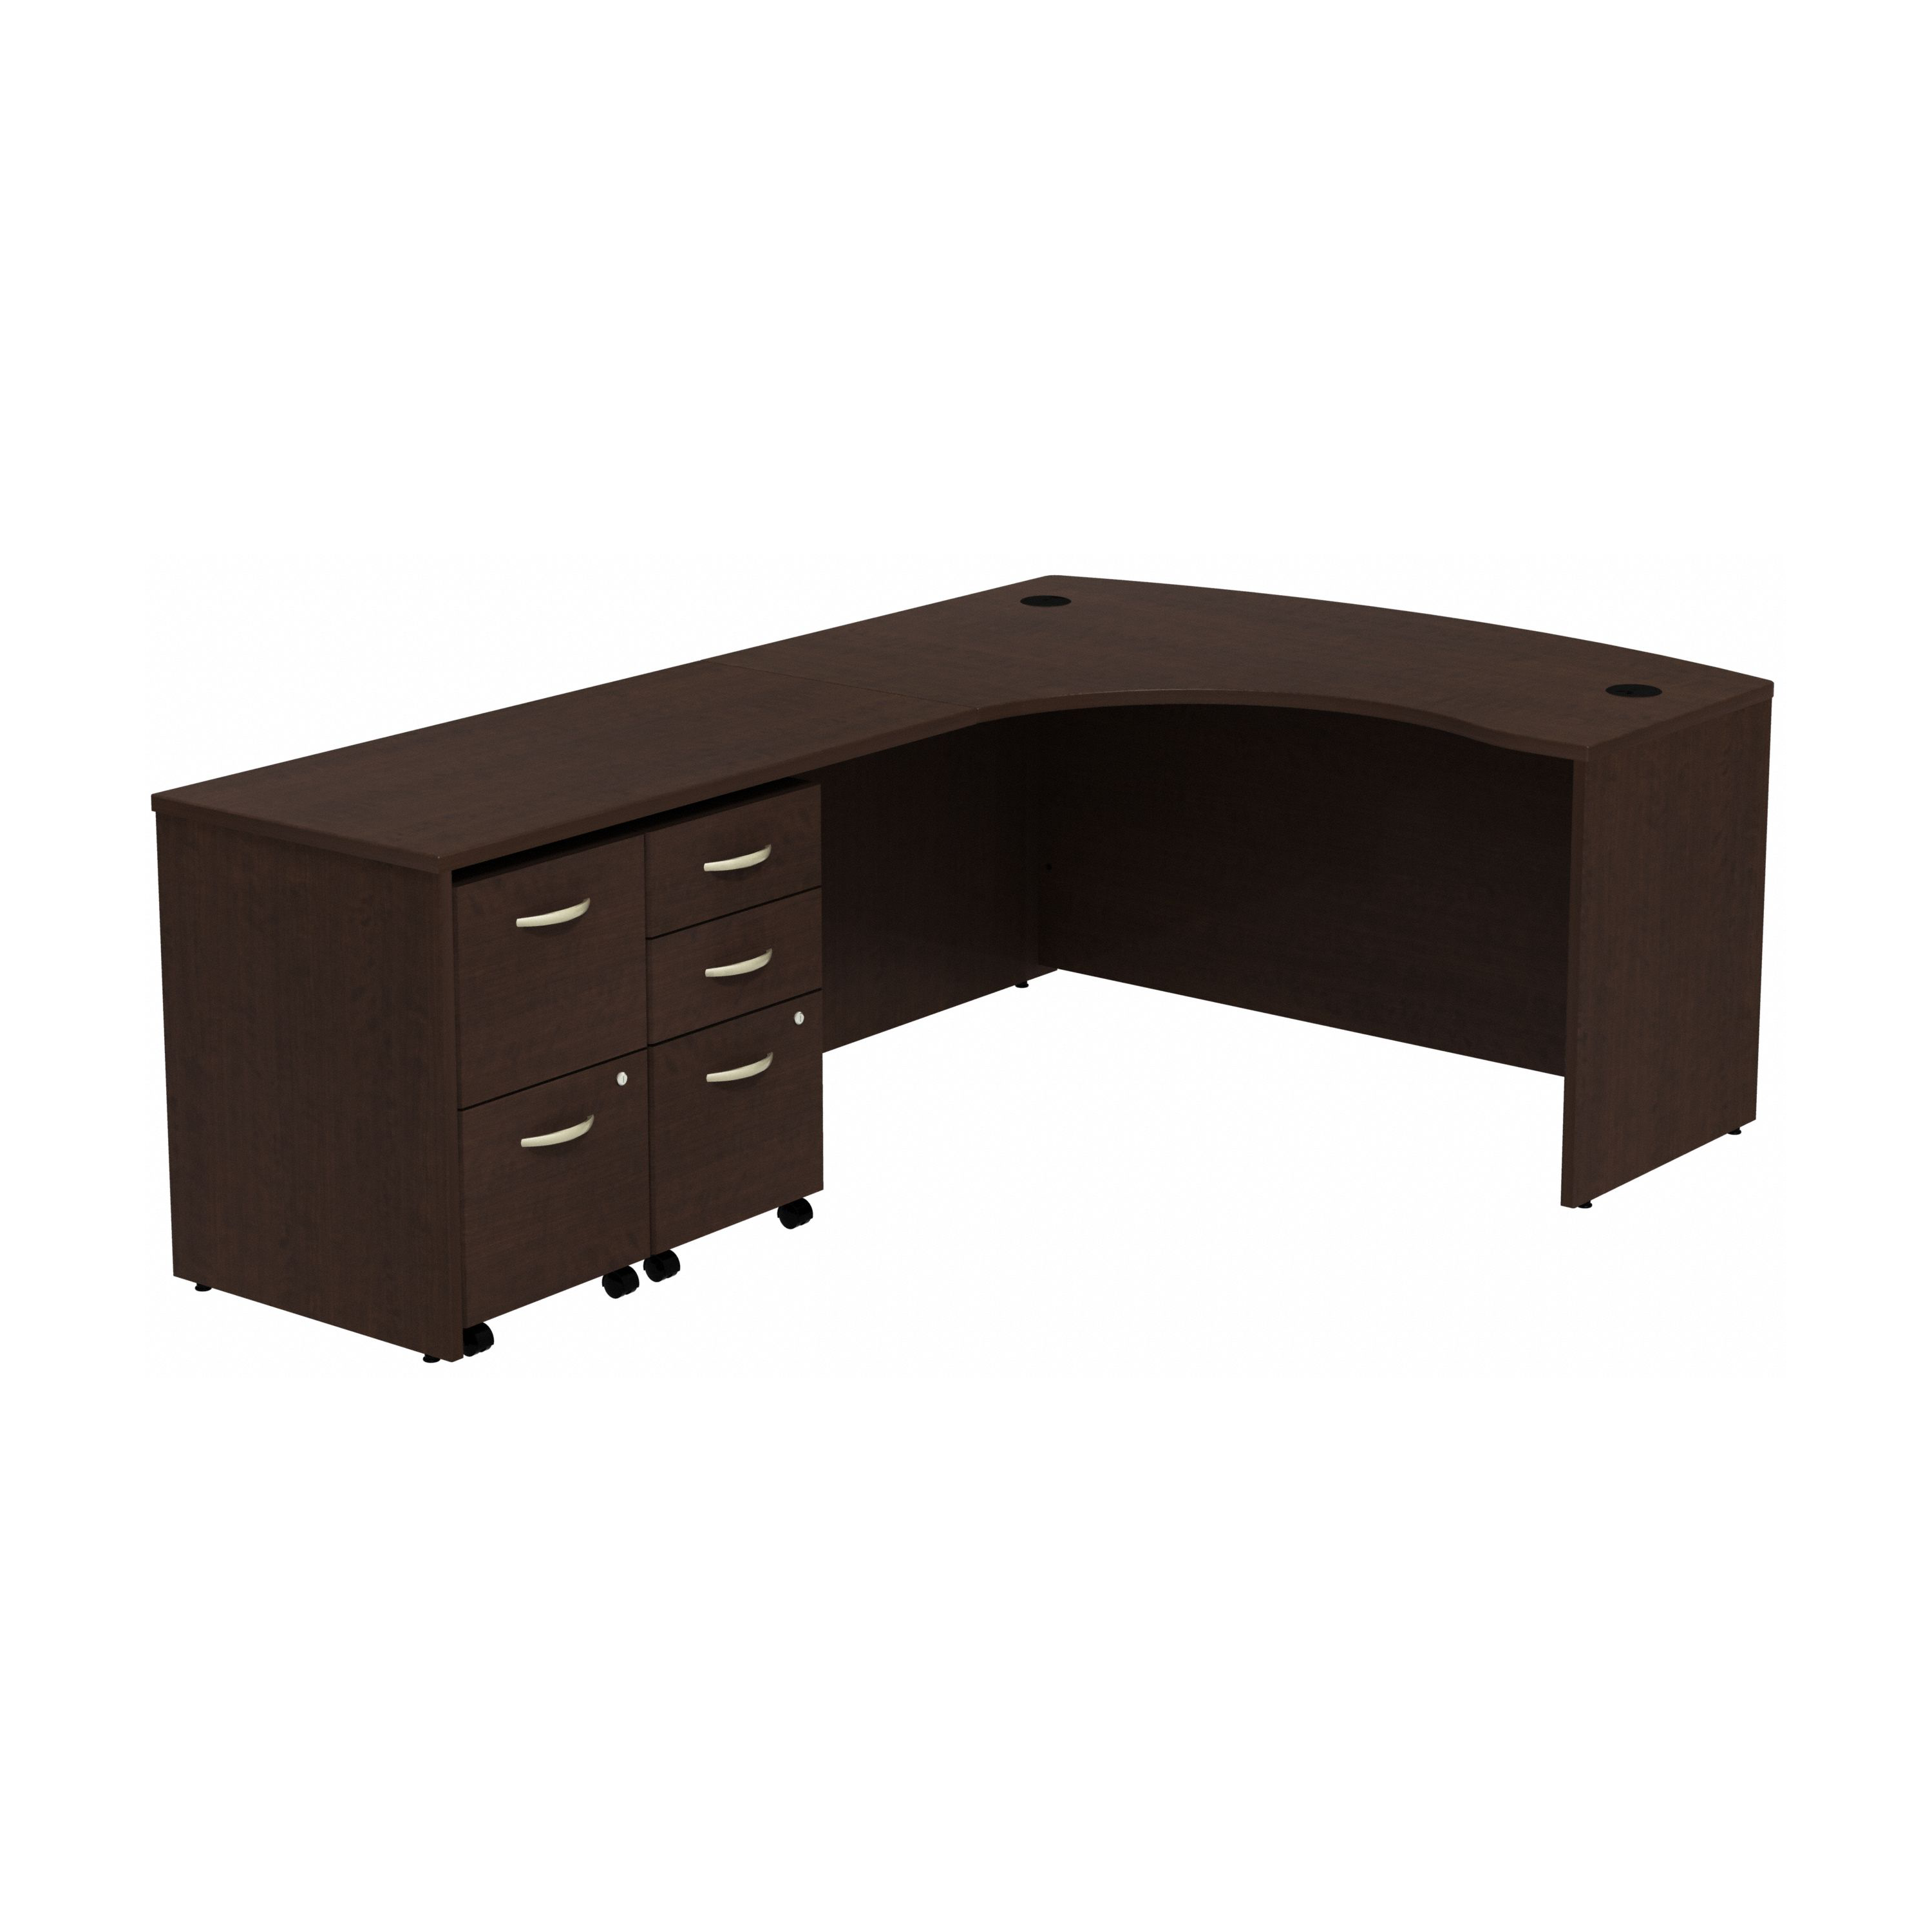 Shop Bush Business Furniture Series C Bow Front Left Handed L Shaped Desk with 2 Mobile Pedestals 02 SRC034MRLSU #color_mocha cherry